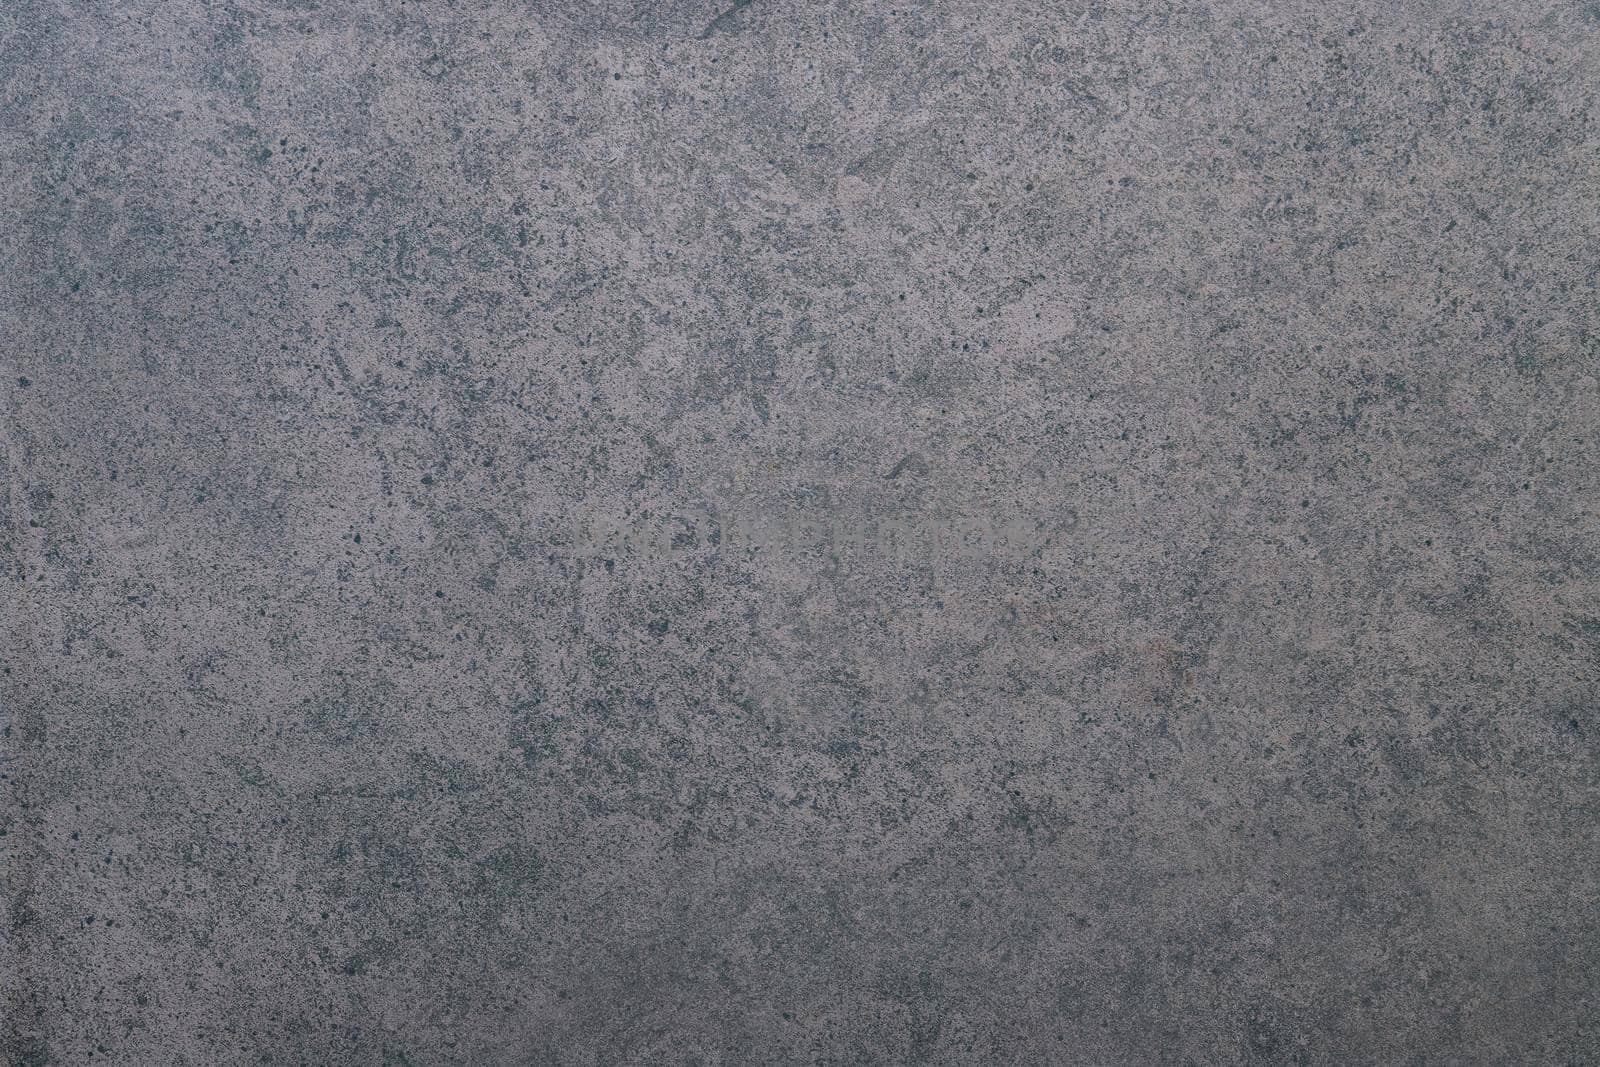 Dark stone wall texture background. Natural black slate concrete background pattern.